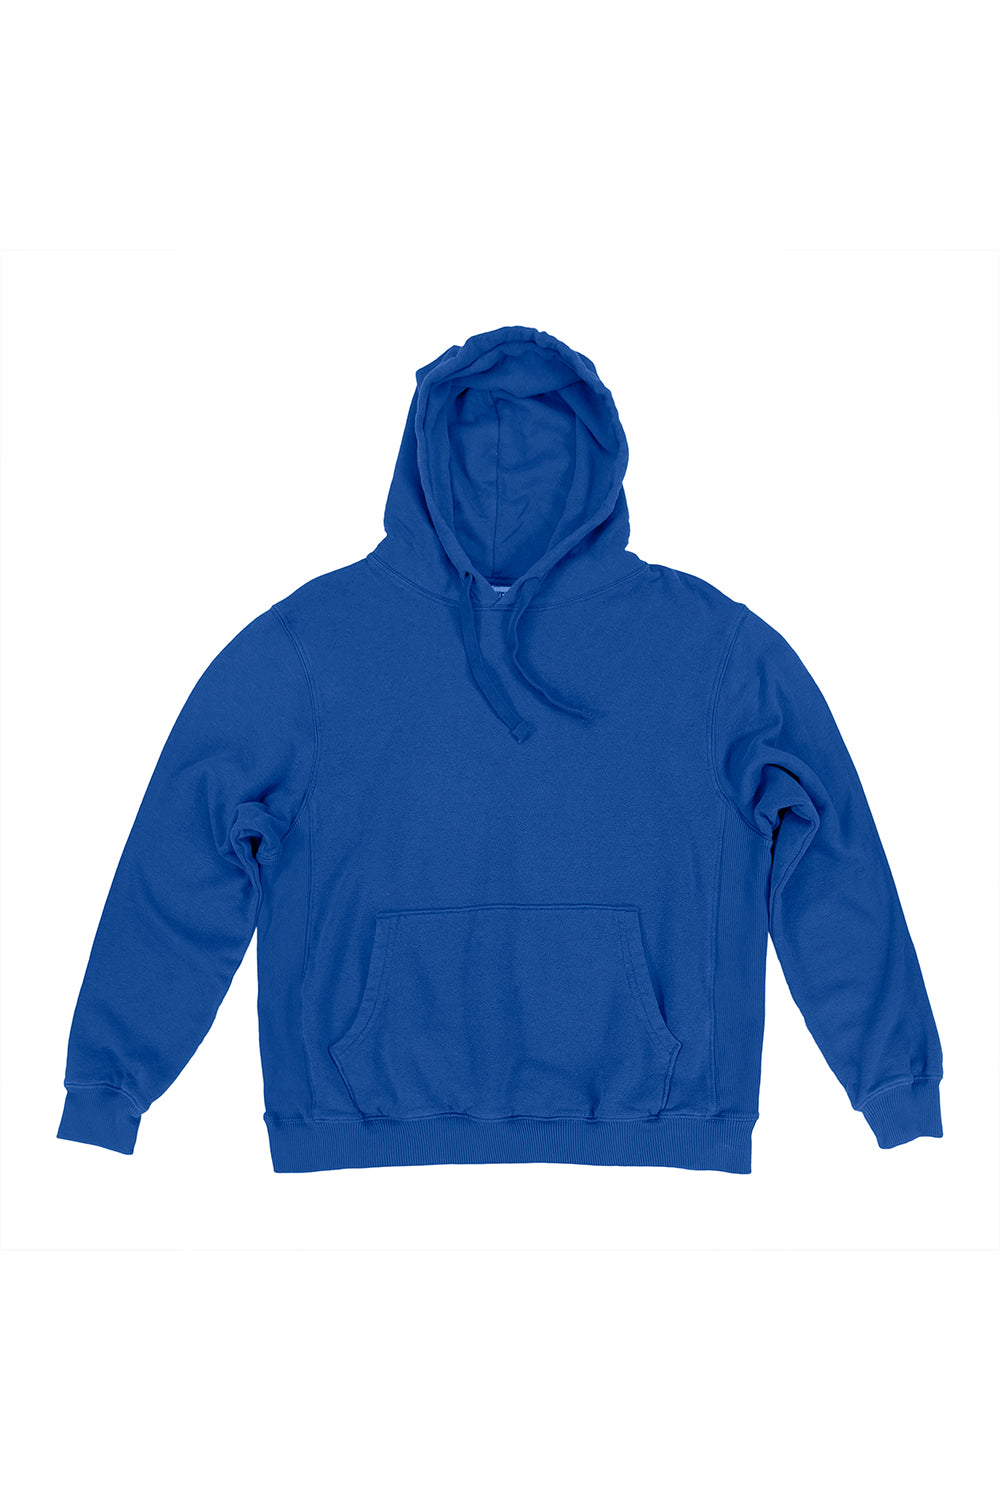 Montauk Hooded Sweatshirt | Jungmaven Hemp Clothing & Accessories / Color: Galaxy Blue